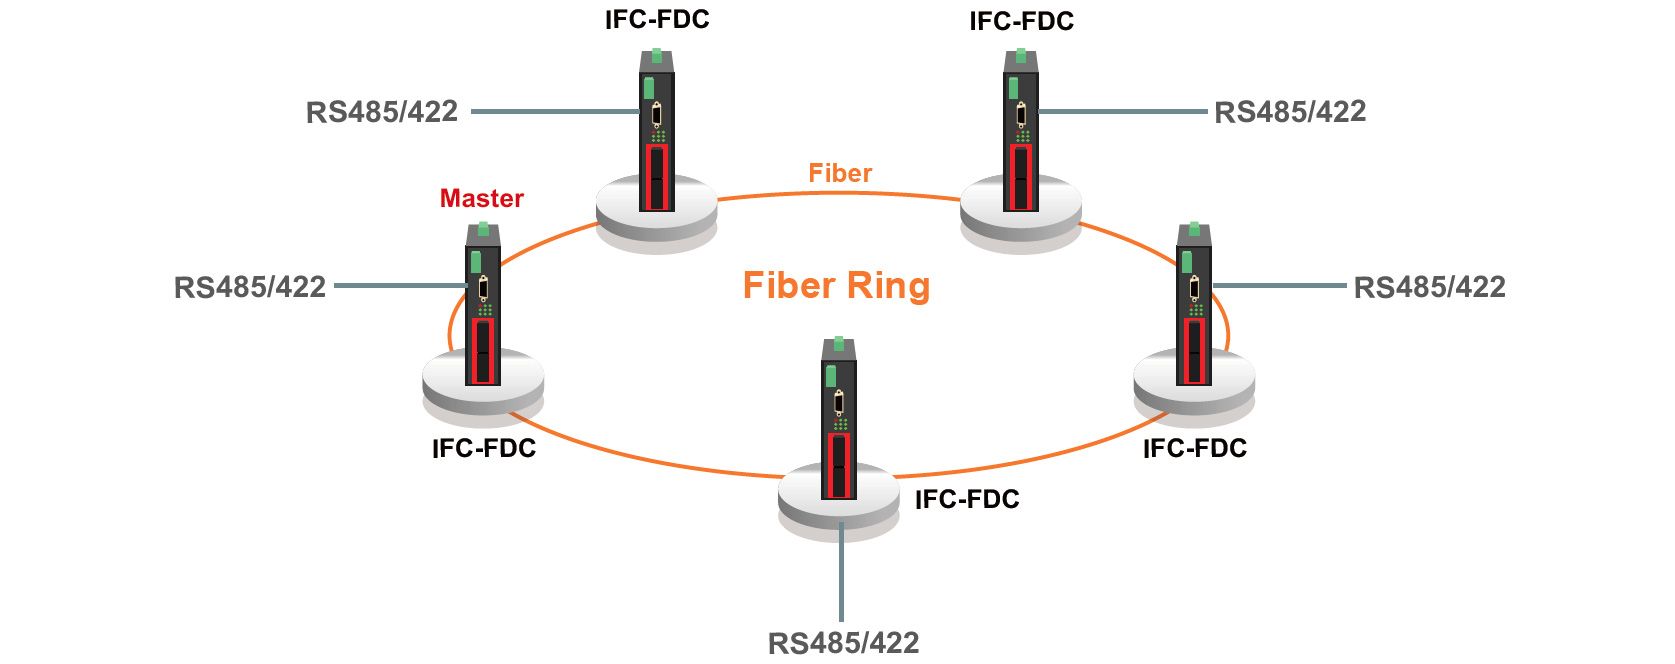 IFC-FDC Glasfaser-Ringredundanz-Topologie &amp; Anwendung